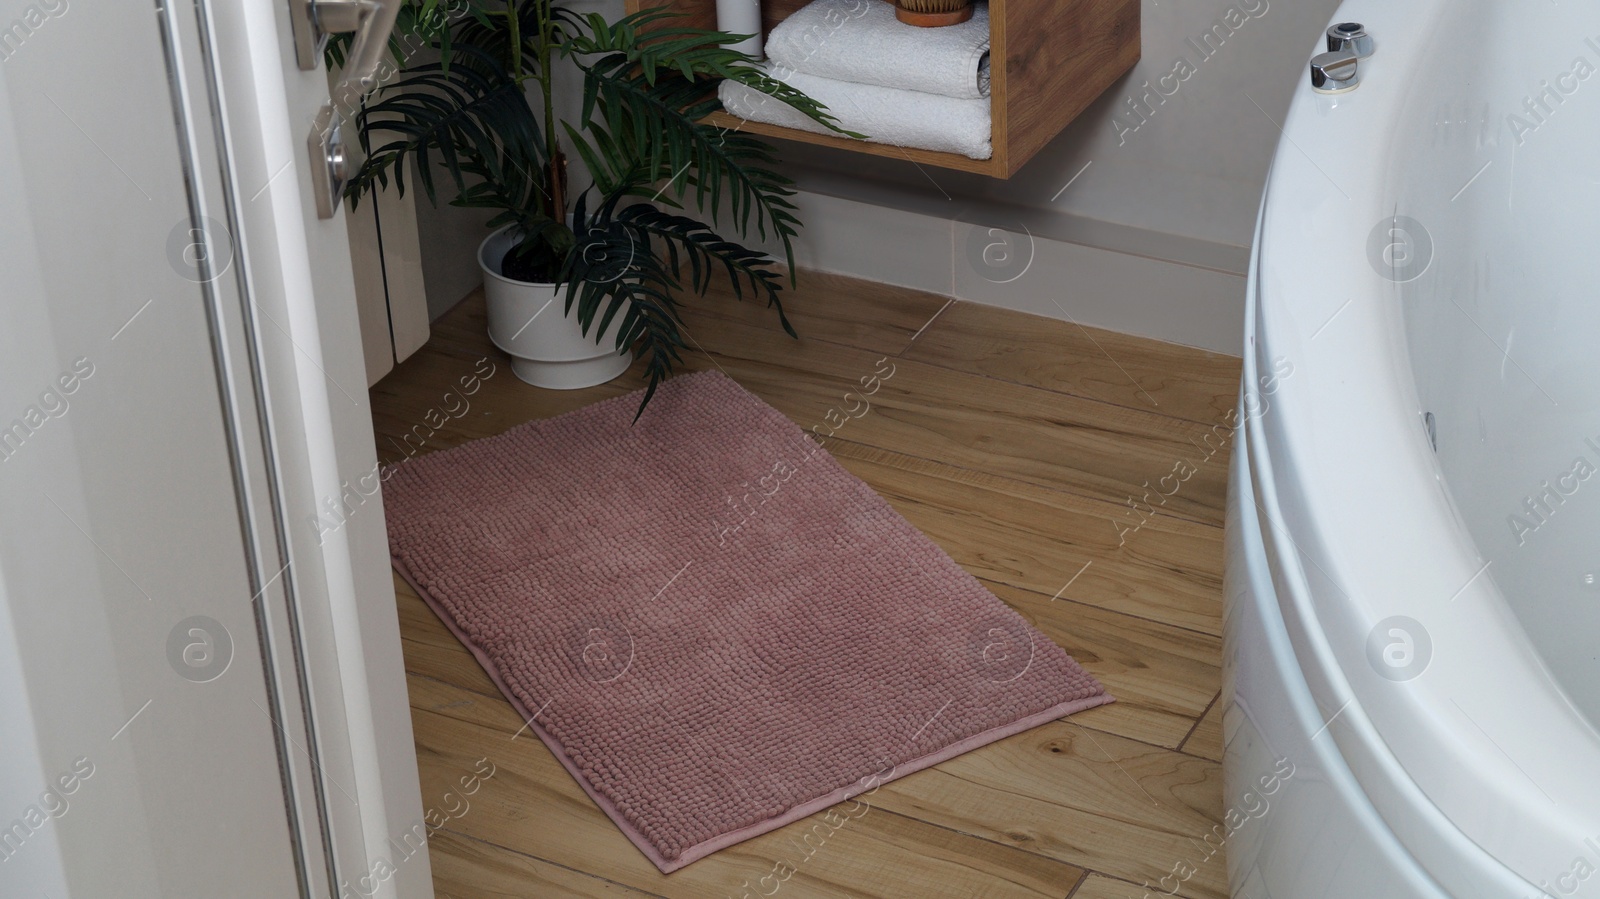 Photo of Soft bath mat on wooden floor in bathroom